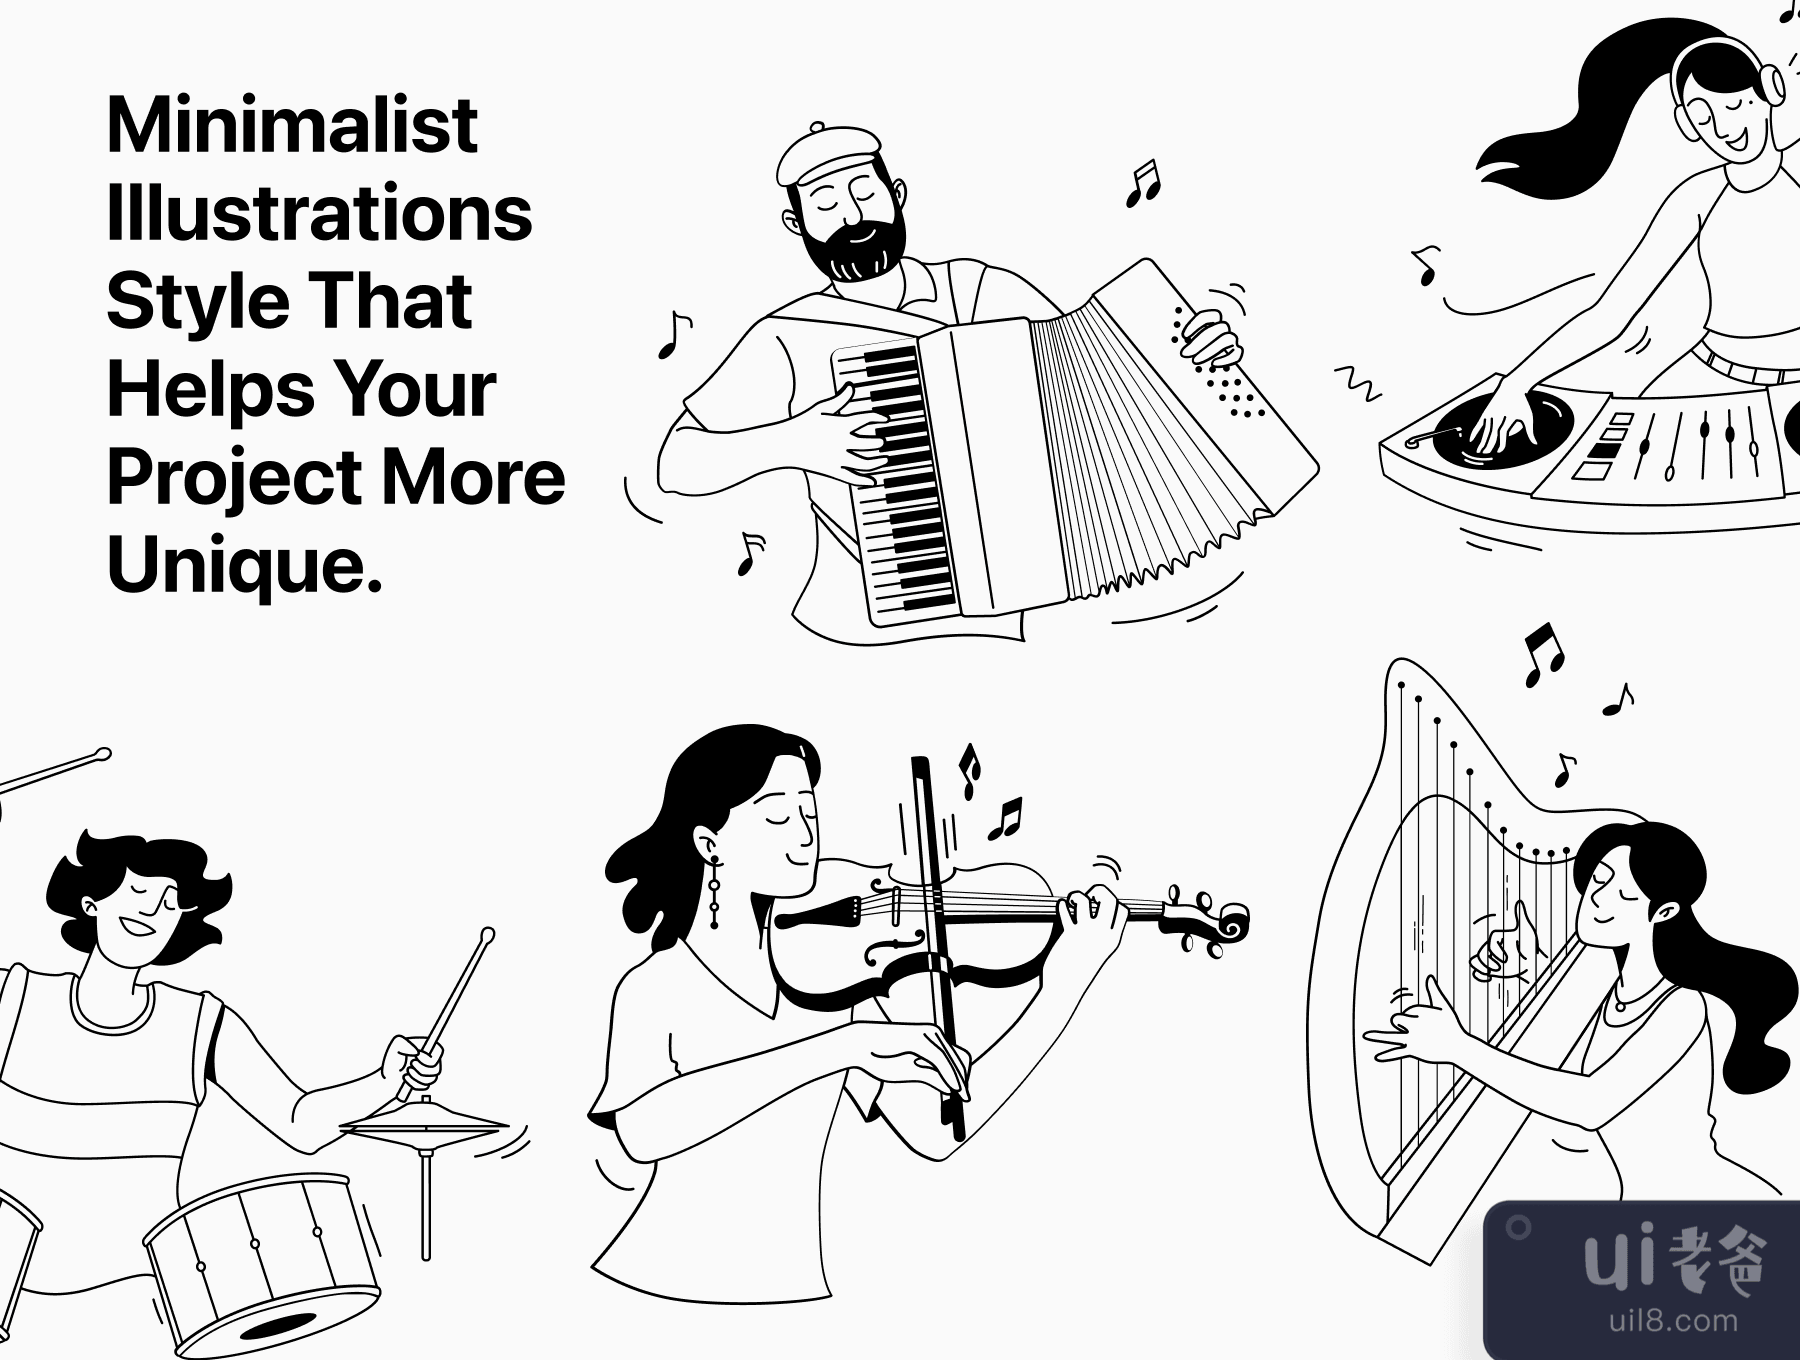 Musicy - 艺术家 - 音乐家插图 (Musicy - Artist - Musician Illustrations)插图1